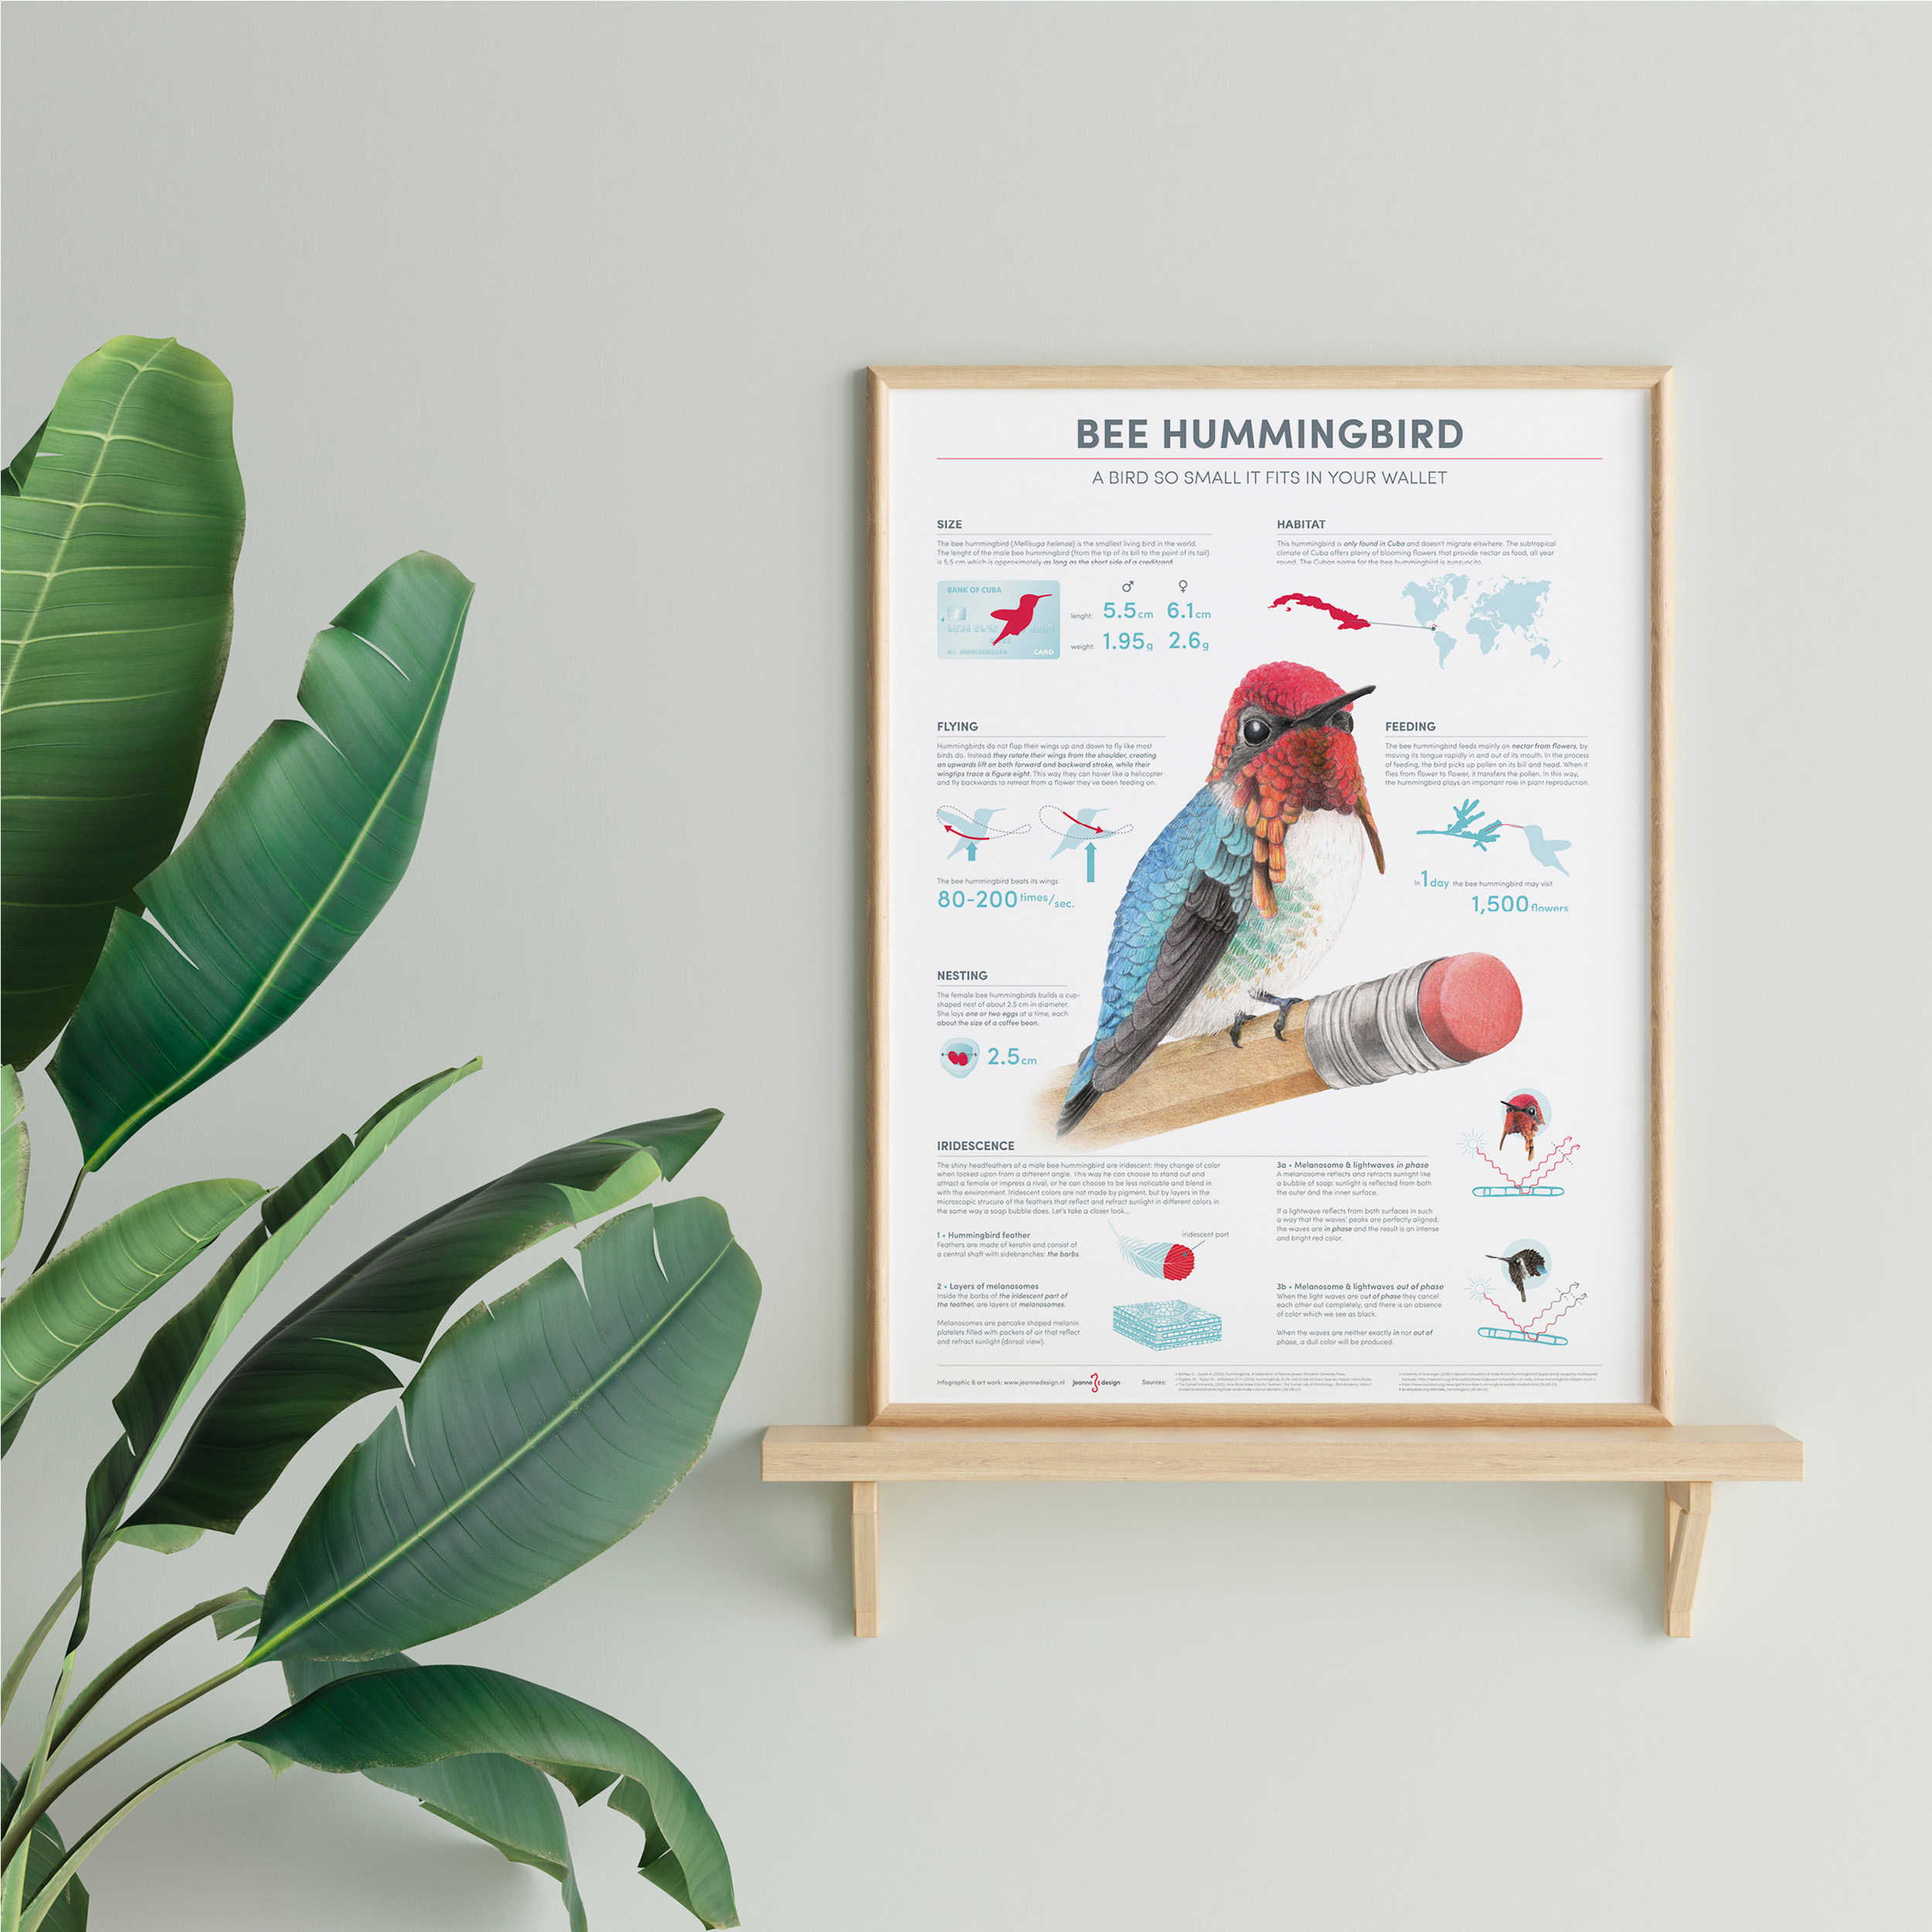 Bee Hummingbird infographic poster